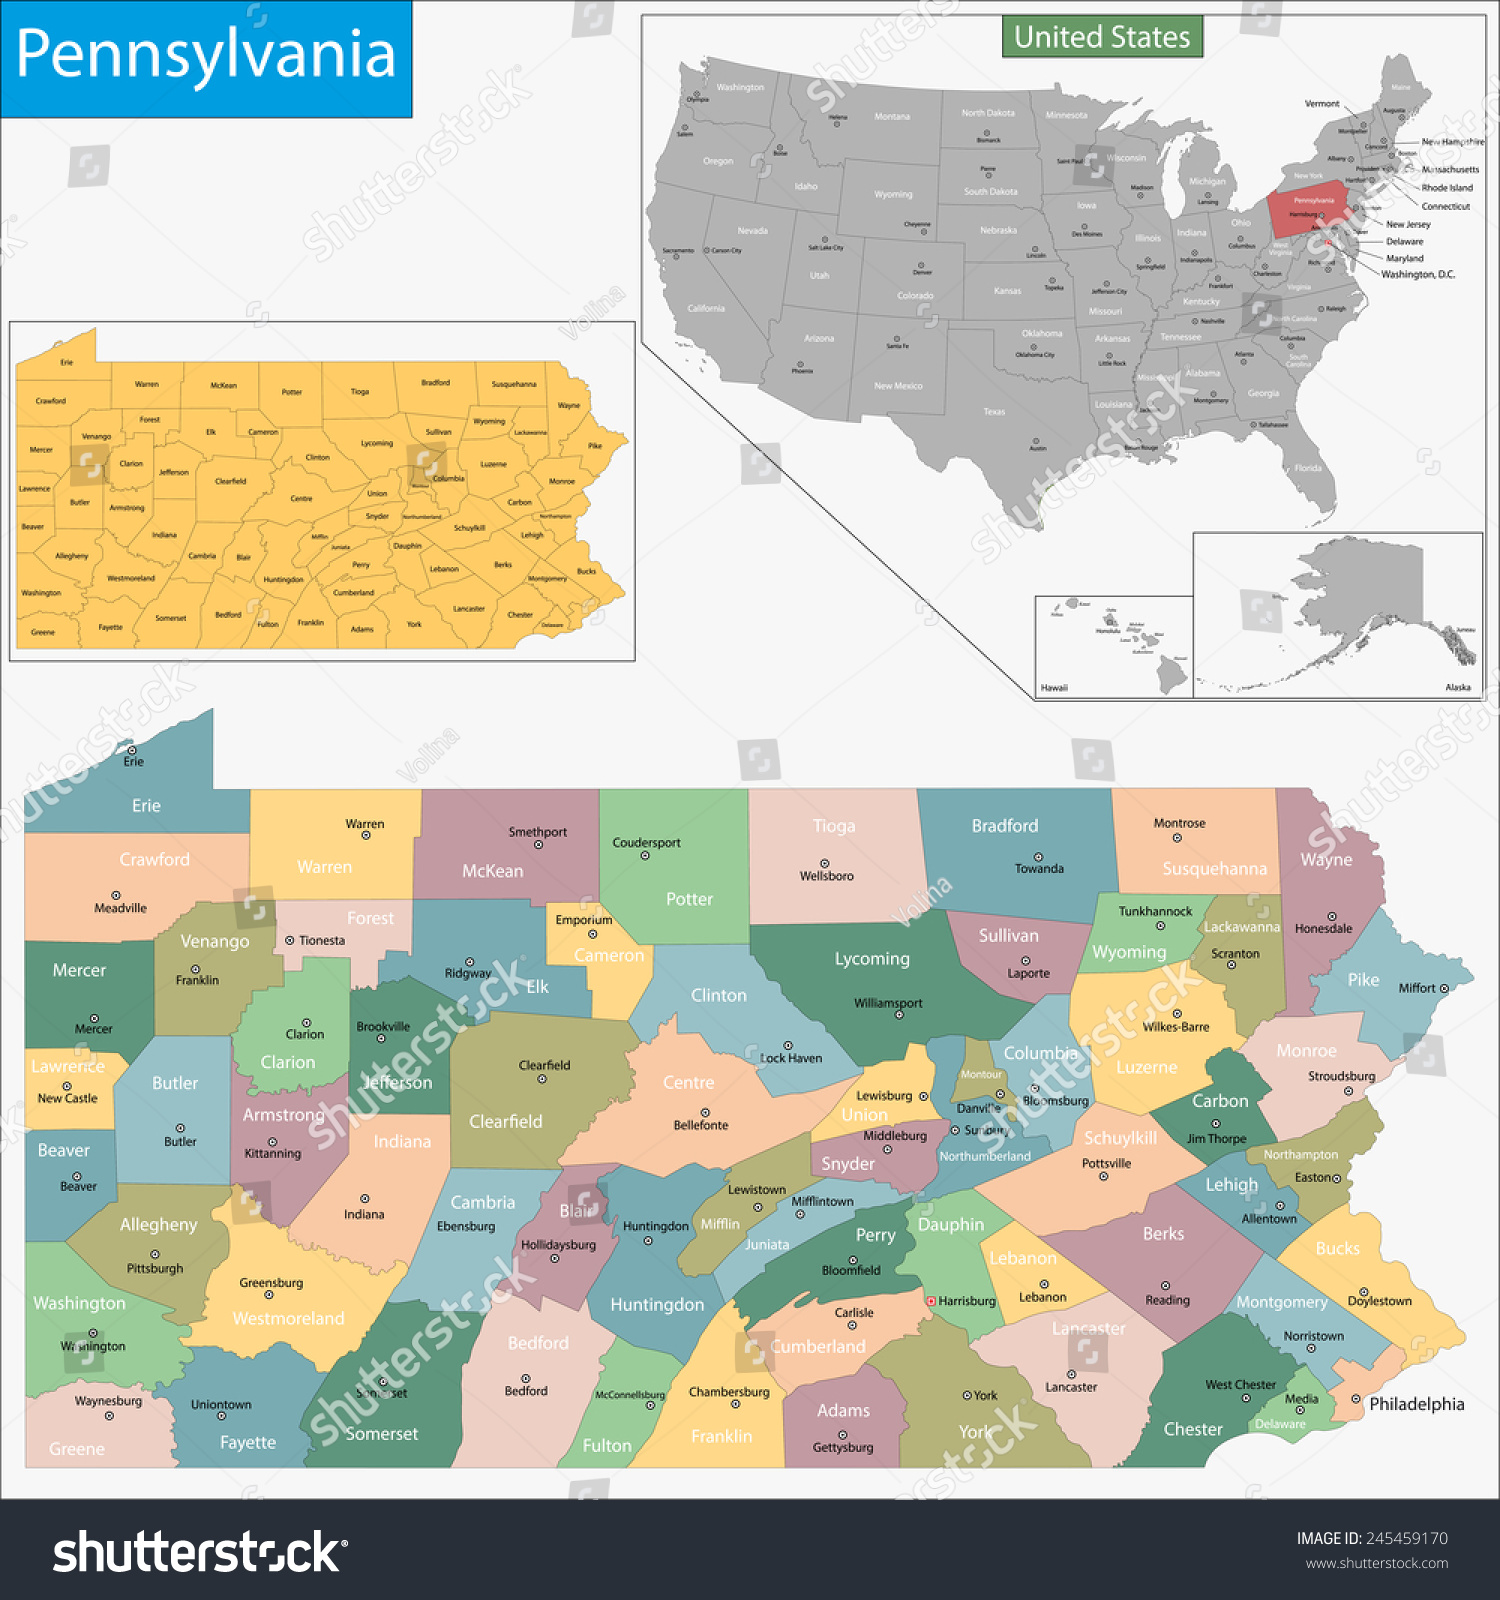 Dating age laws pennsylvania | Pennsylvania Age of Consent & Statutory ...